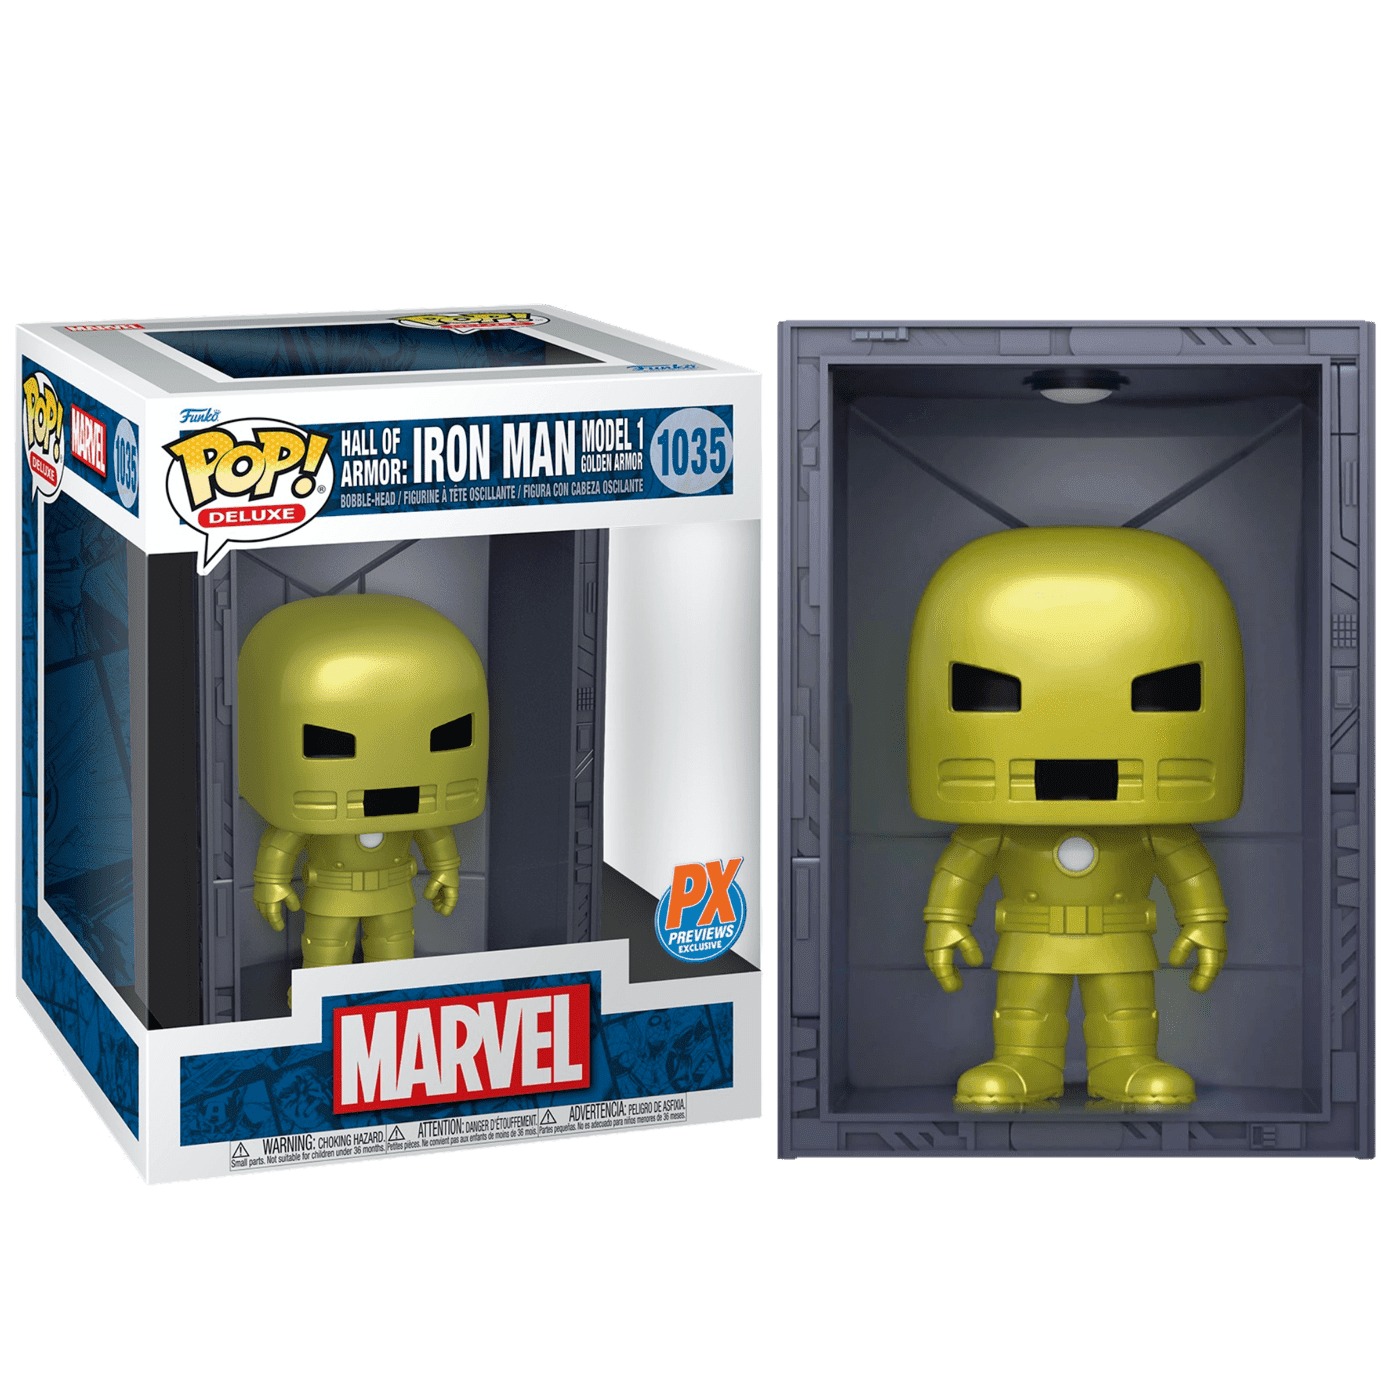 Фигурка Funko Pop! Marvel: Iron Man Hall of Armor Model 1 Deluxe Vinyl Figure фигурка iron man железный человек